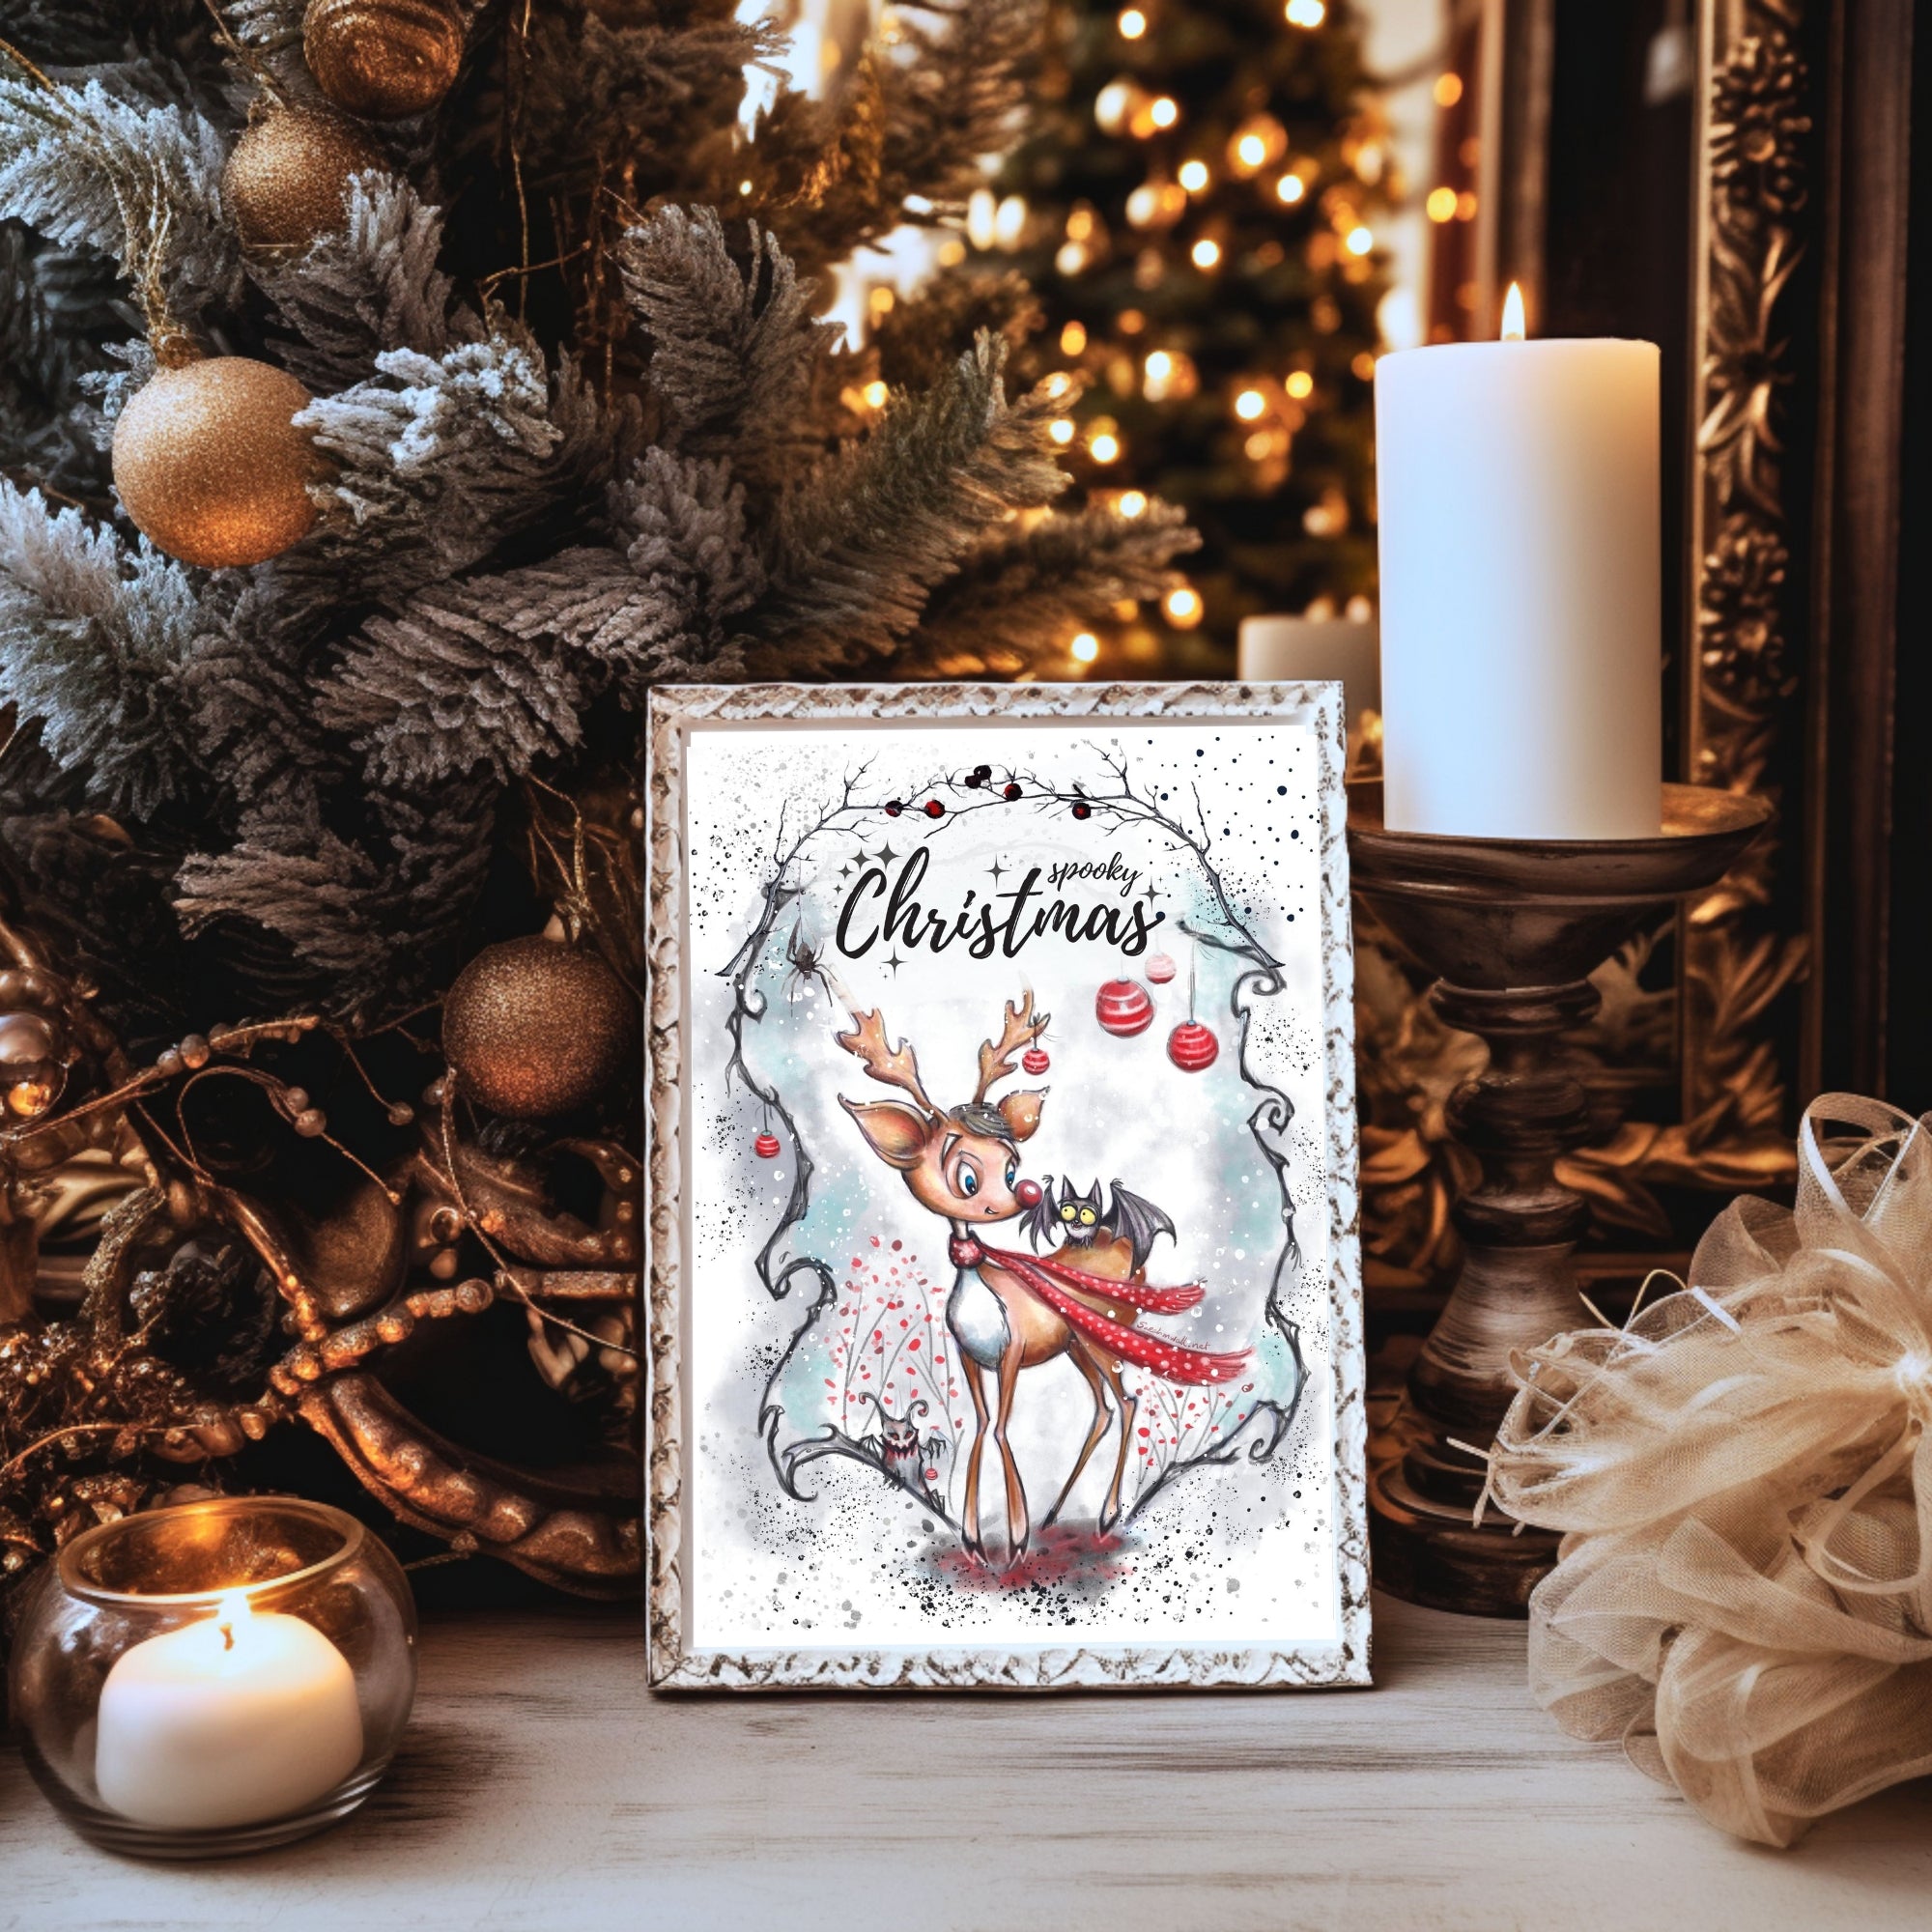 Spooky Christmas Postkarte mit Rudolf dem Rentier